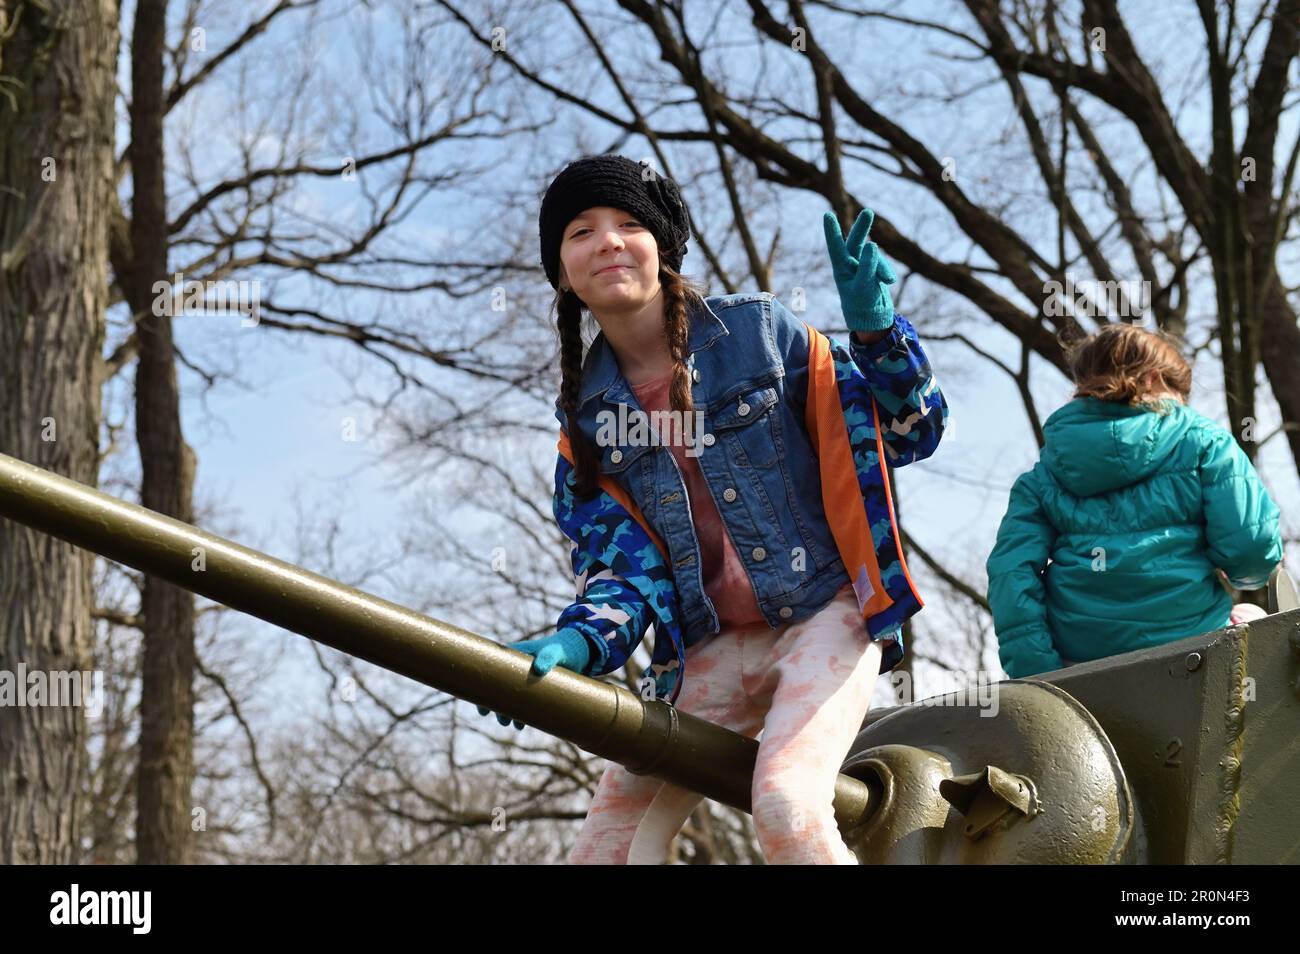 Wheaton, Illinois, USA. Children climbing on military tanks at Cantigny Park. Stock Photo